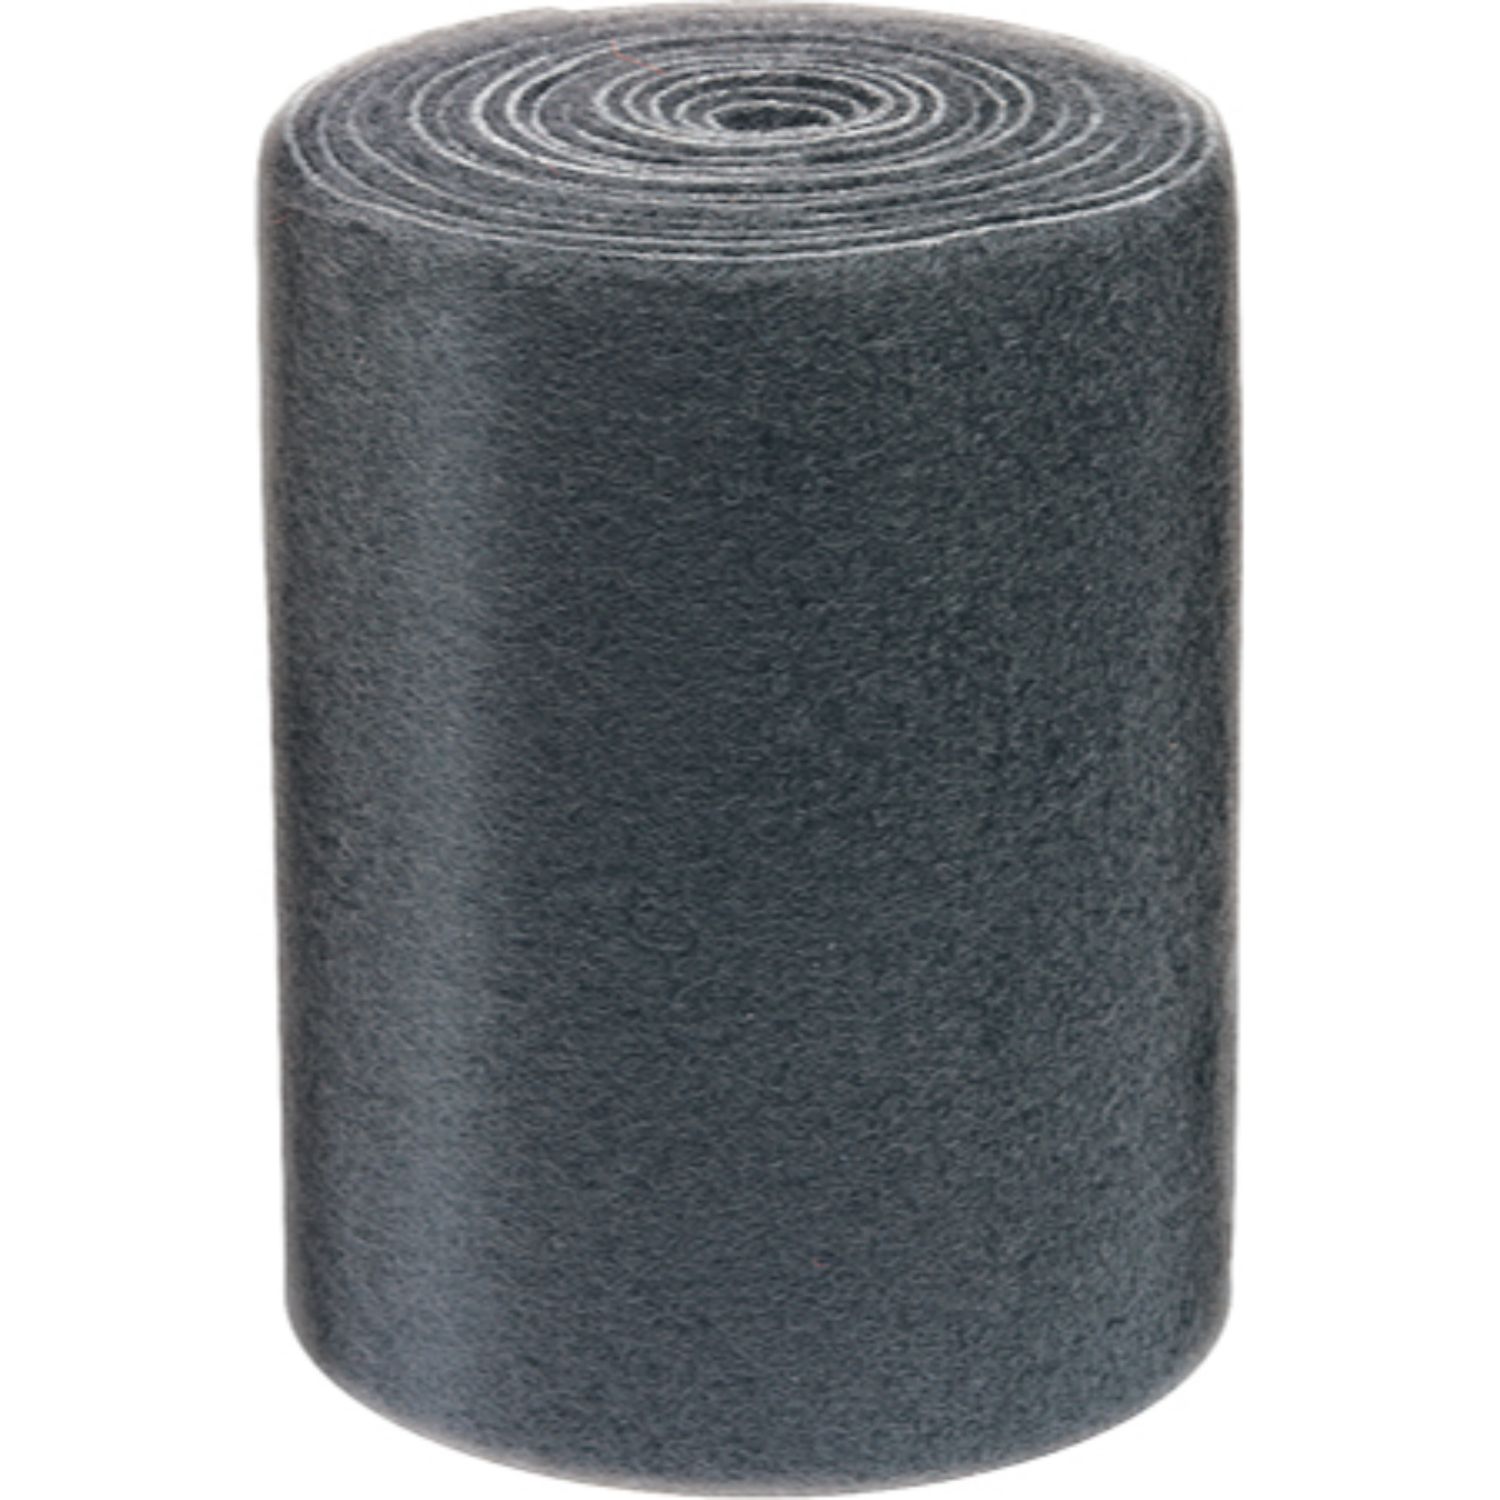 SeaSense 12 in x 12 Ft Bunk Carpet-Charcoal